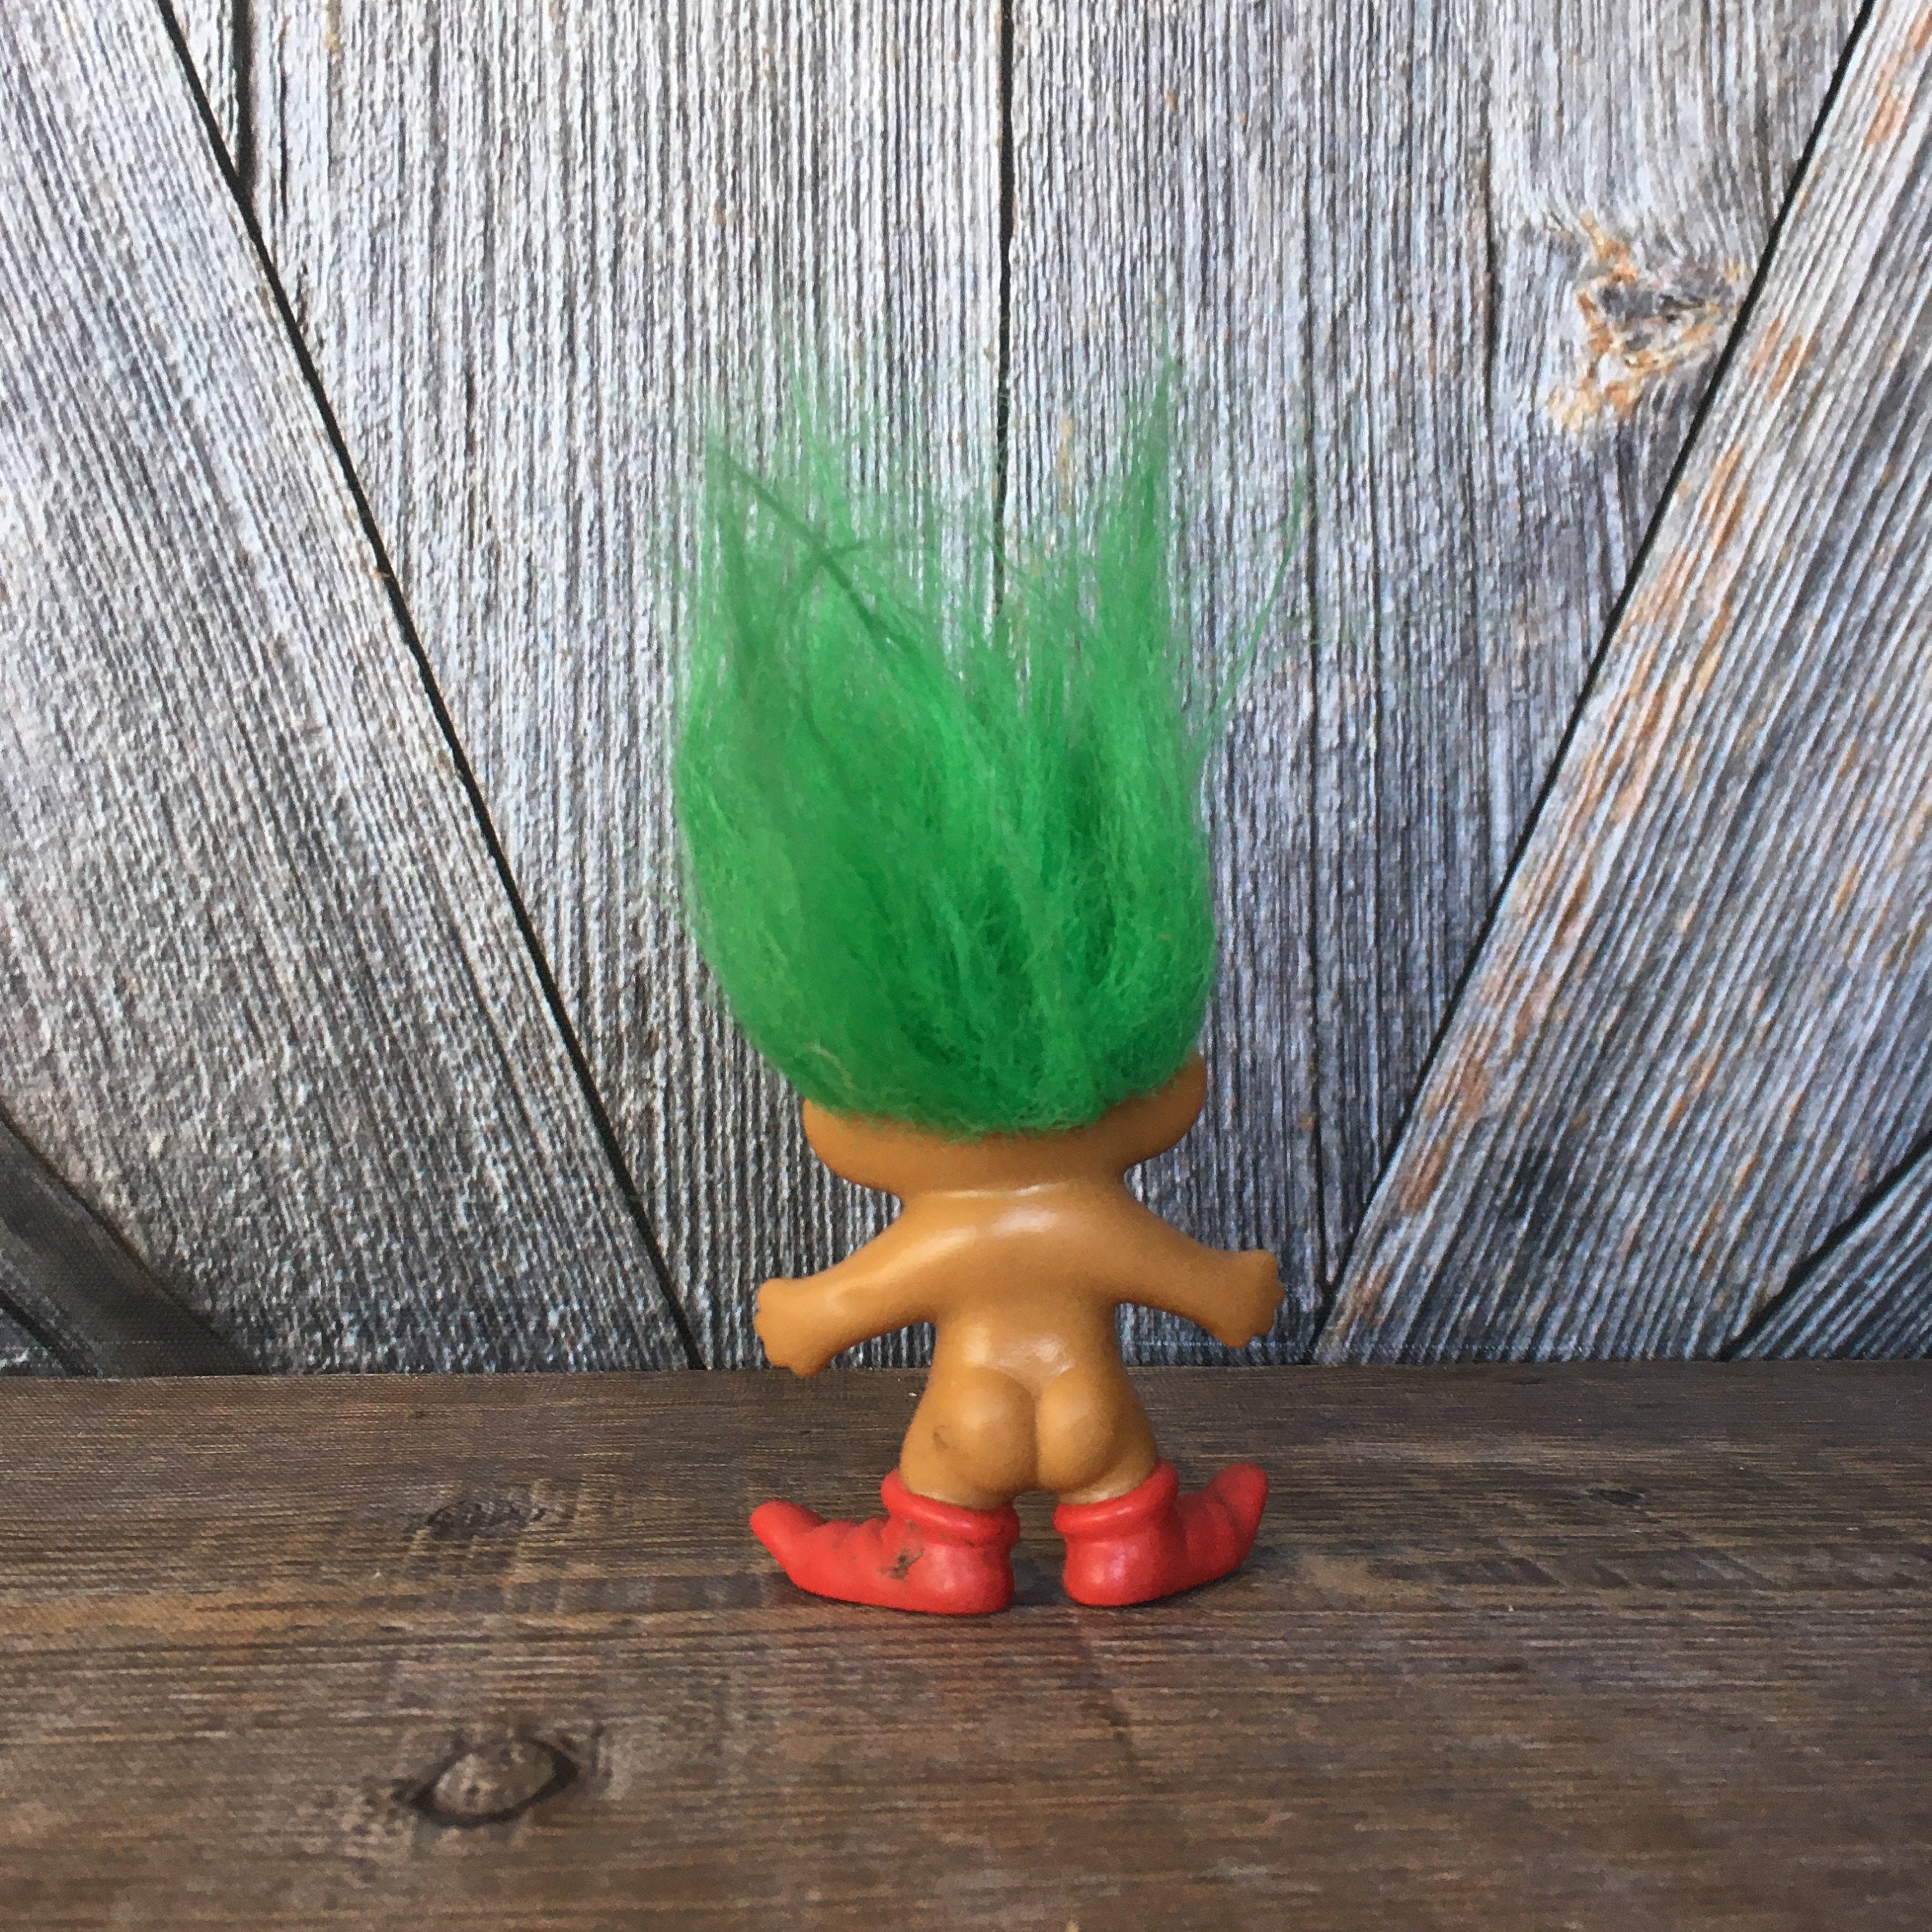 Lot of 10 Trolls Mini Figures Toys - Preowned.